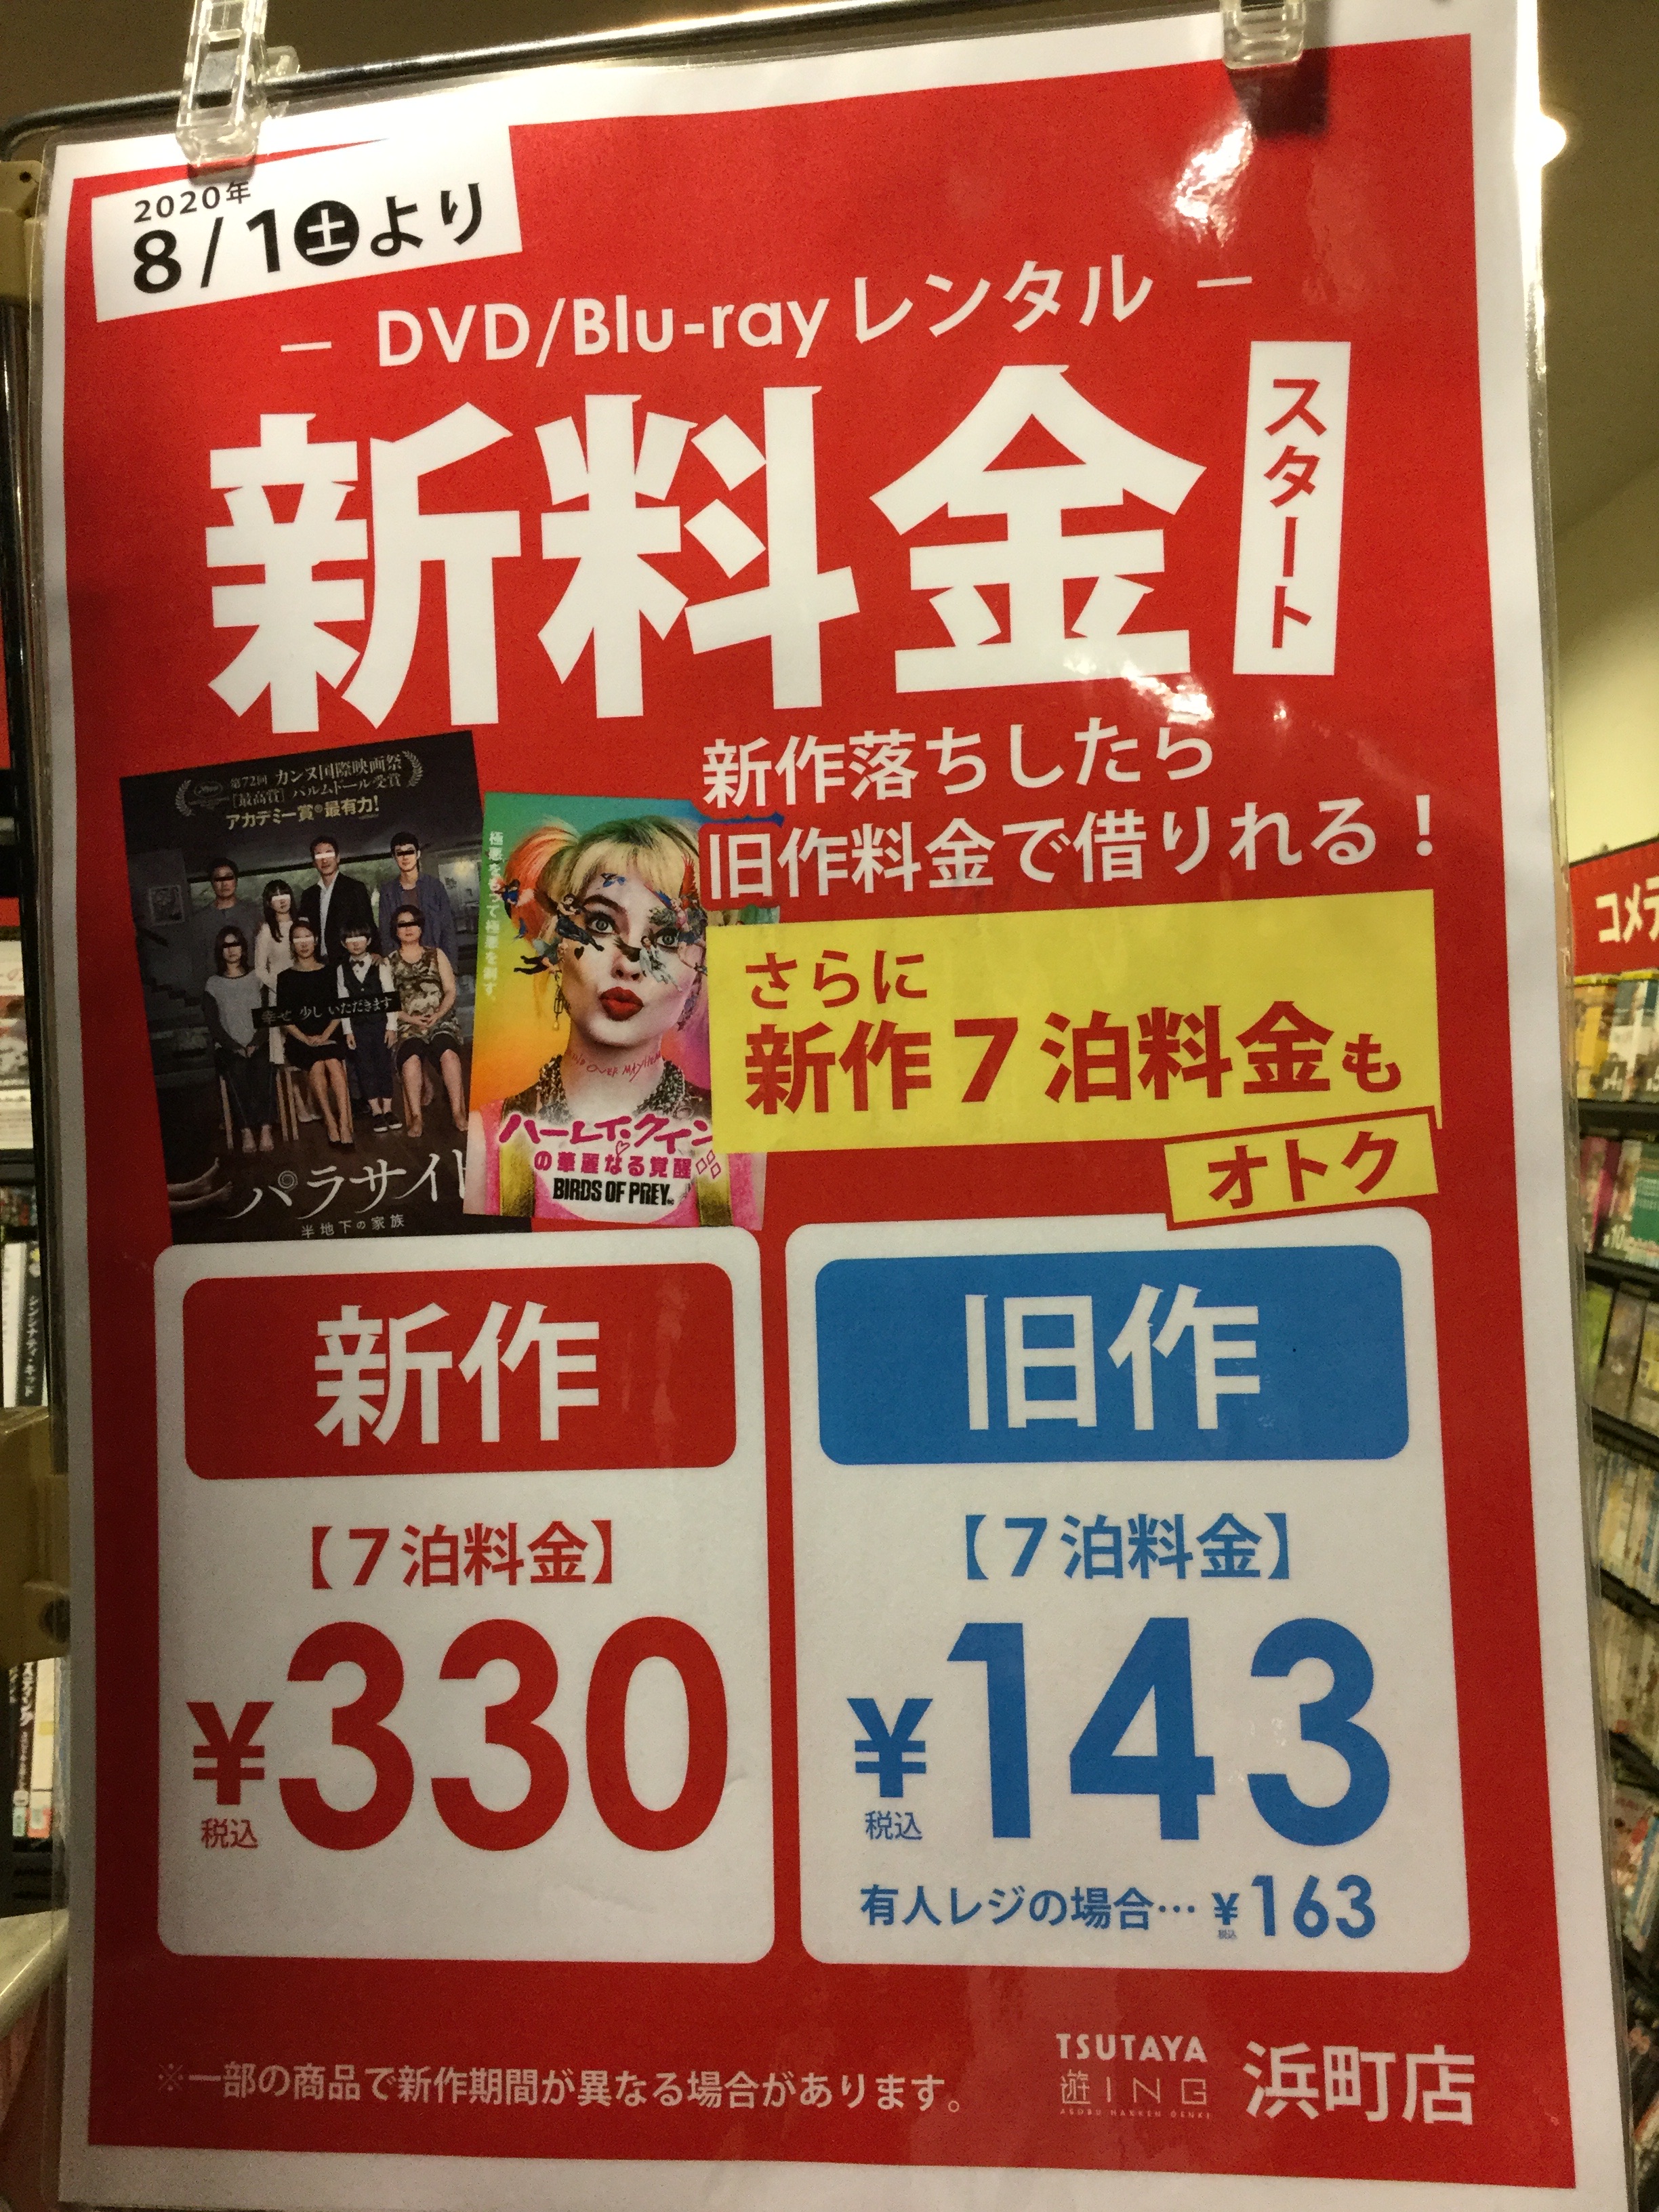 Tsutaya遊ing浜町店 Movie おはようございます 映像レンタル 今週末のイベント情報です 8月 新料金スタート ラクラク ゆったり返却 本日8 17 月 より翌日お昼15時まで 実施中です 8月21日 旧作dvd T Co O4inji7wht Twitter